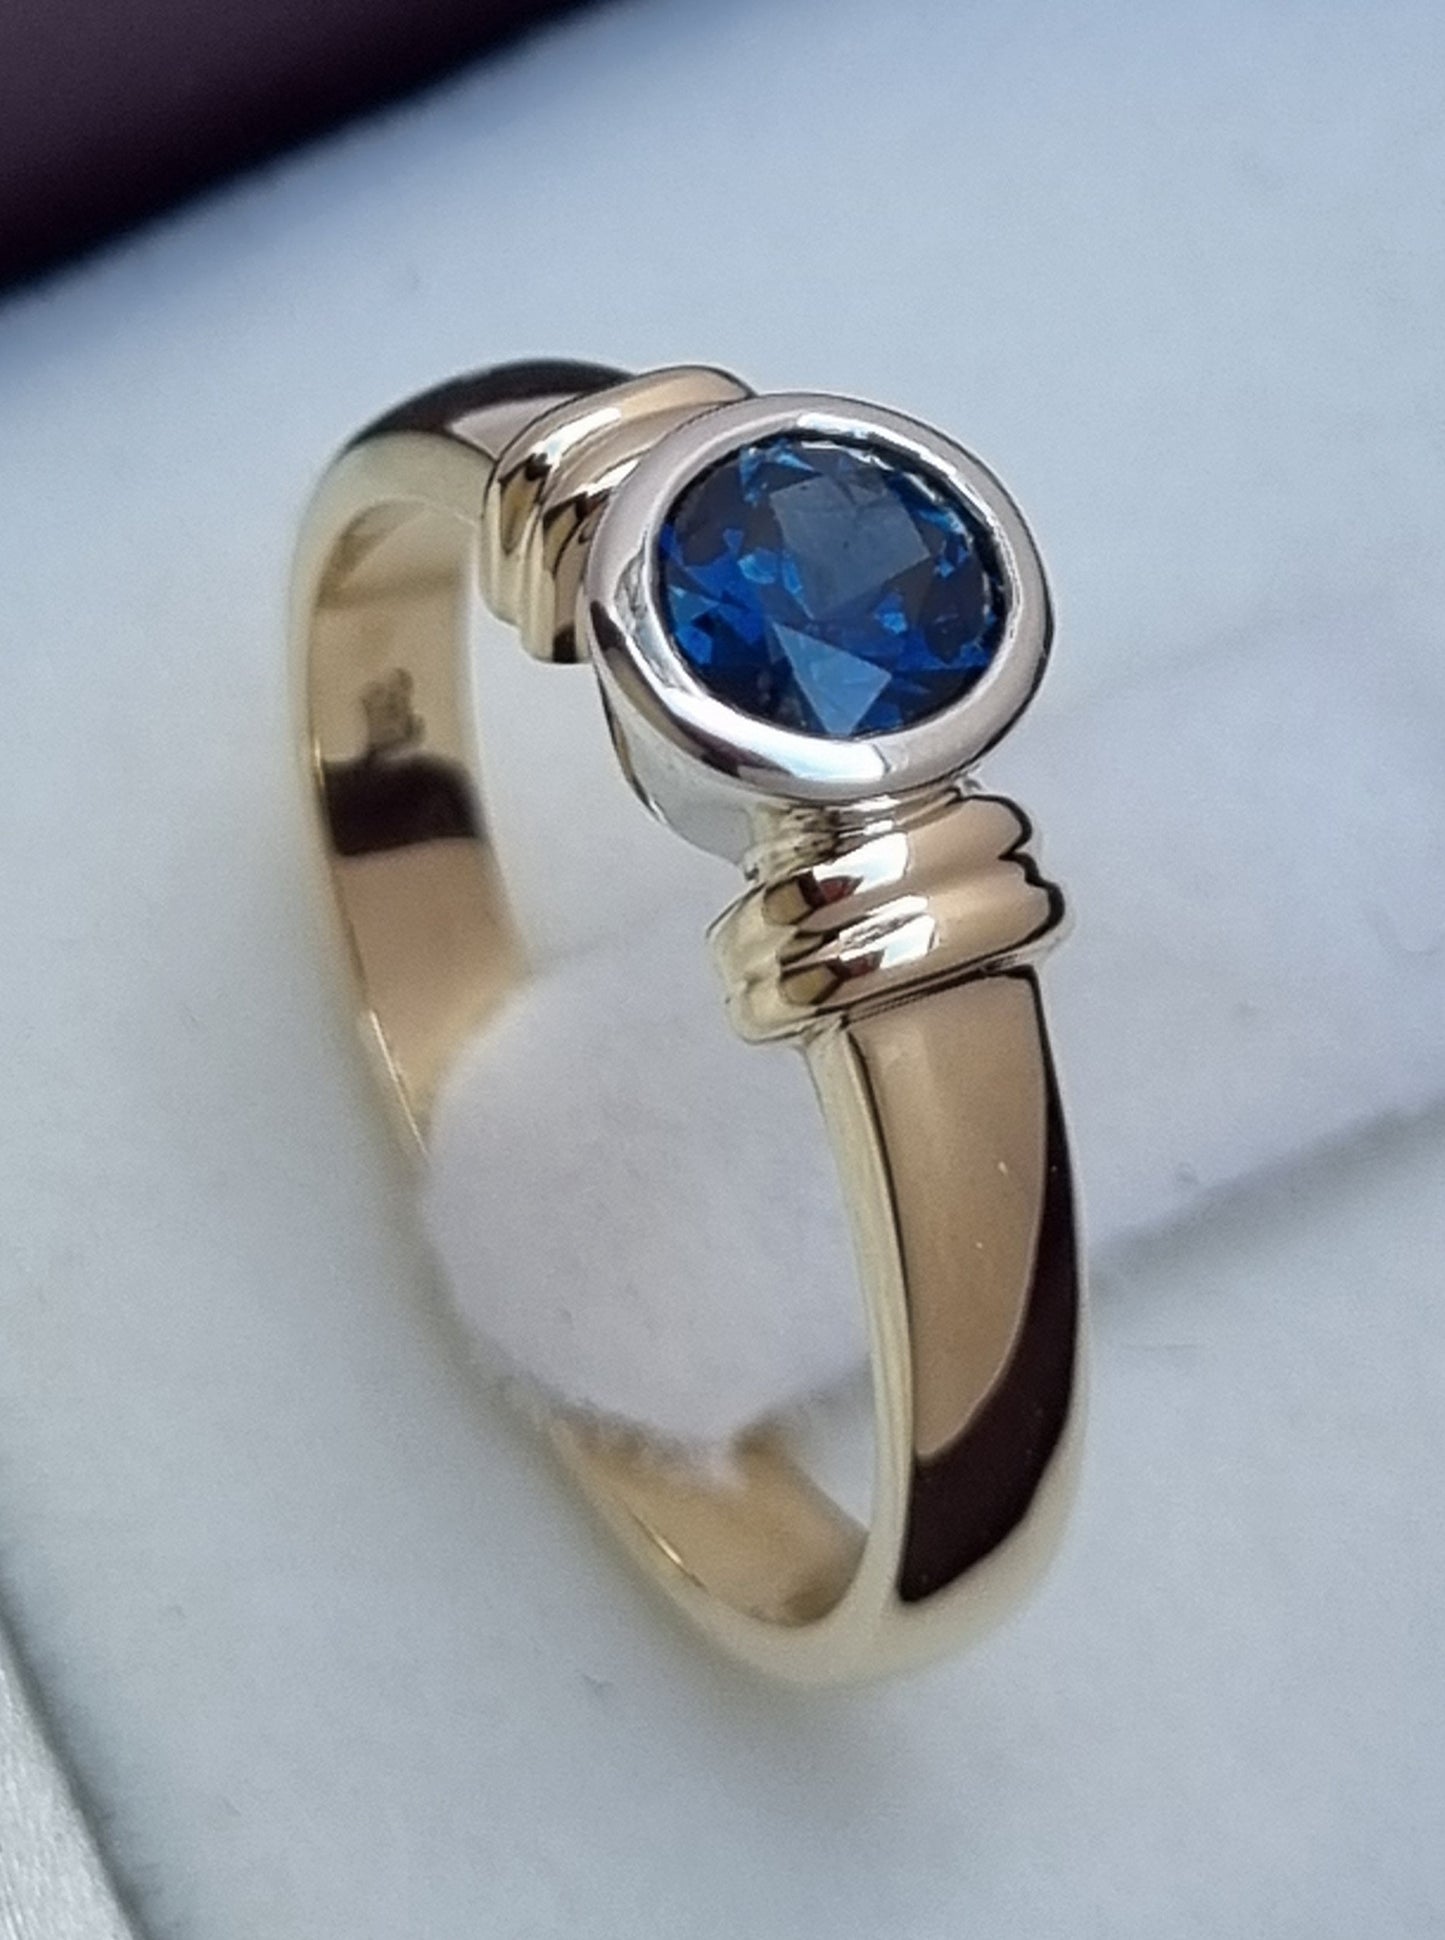 Bezel set Solitaire Blue Sapphire Ring